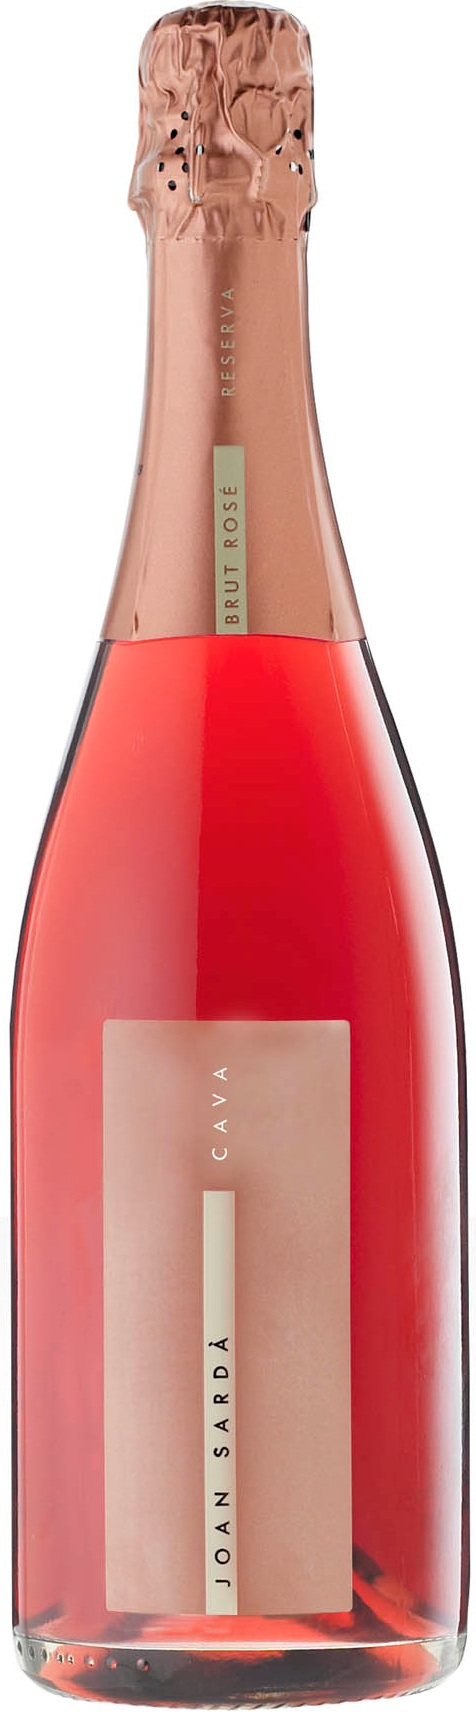 Image of Wine bottle Cava Joan Sardà Brut Rose Reserva